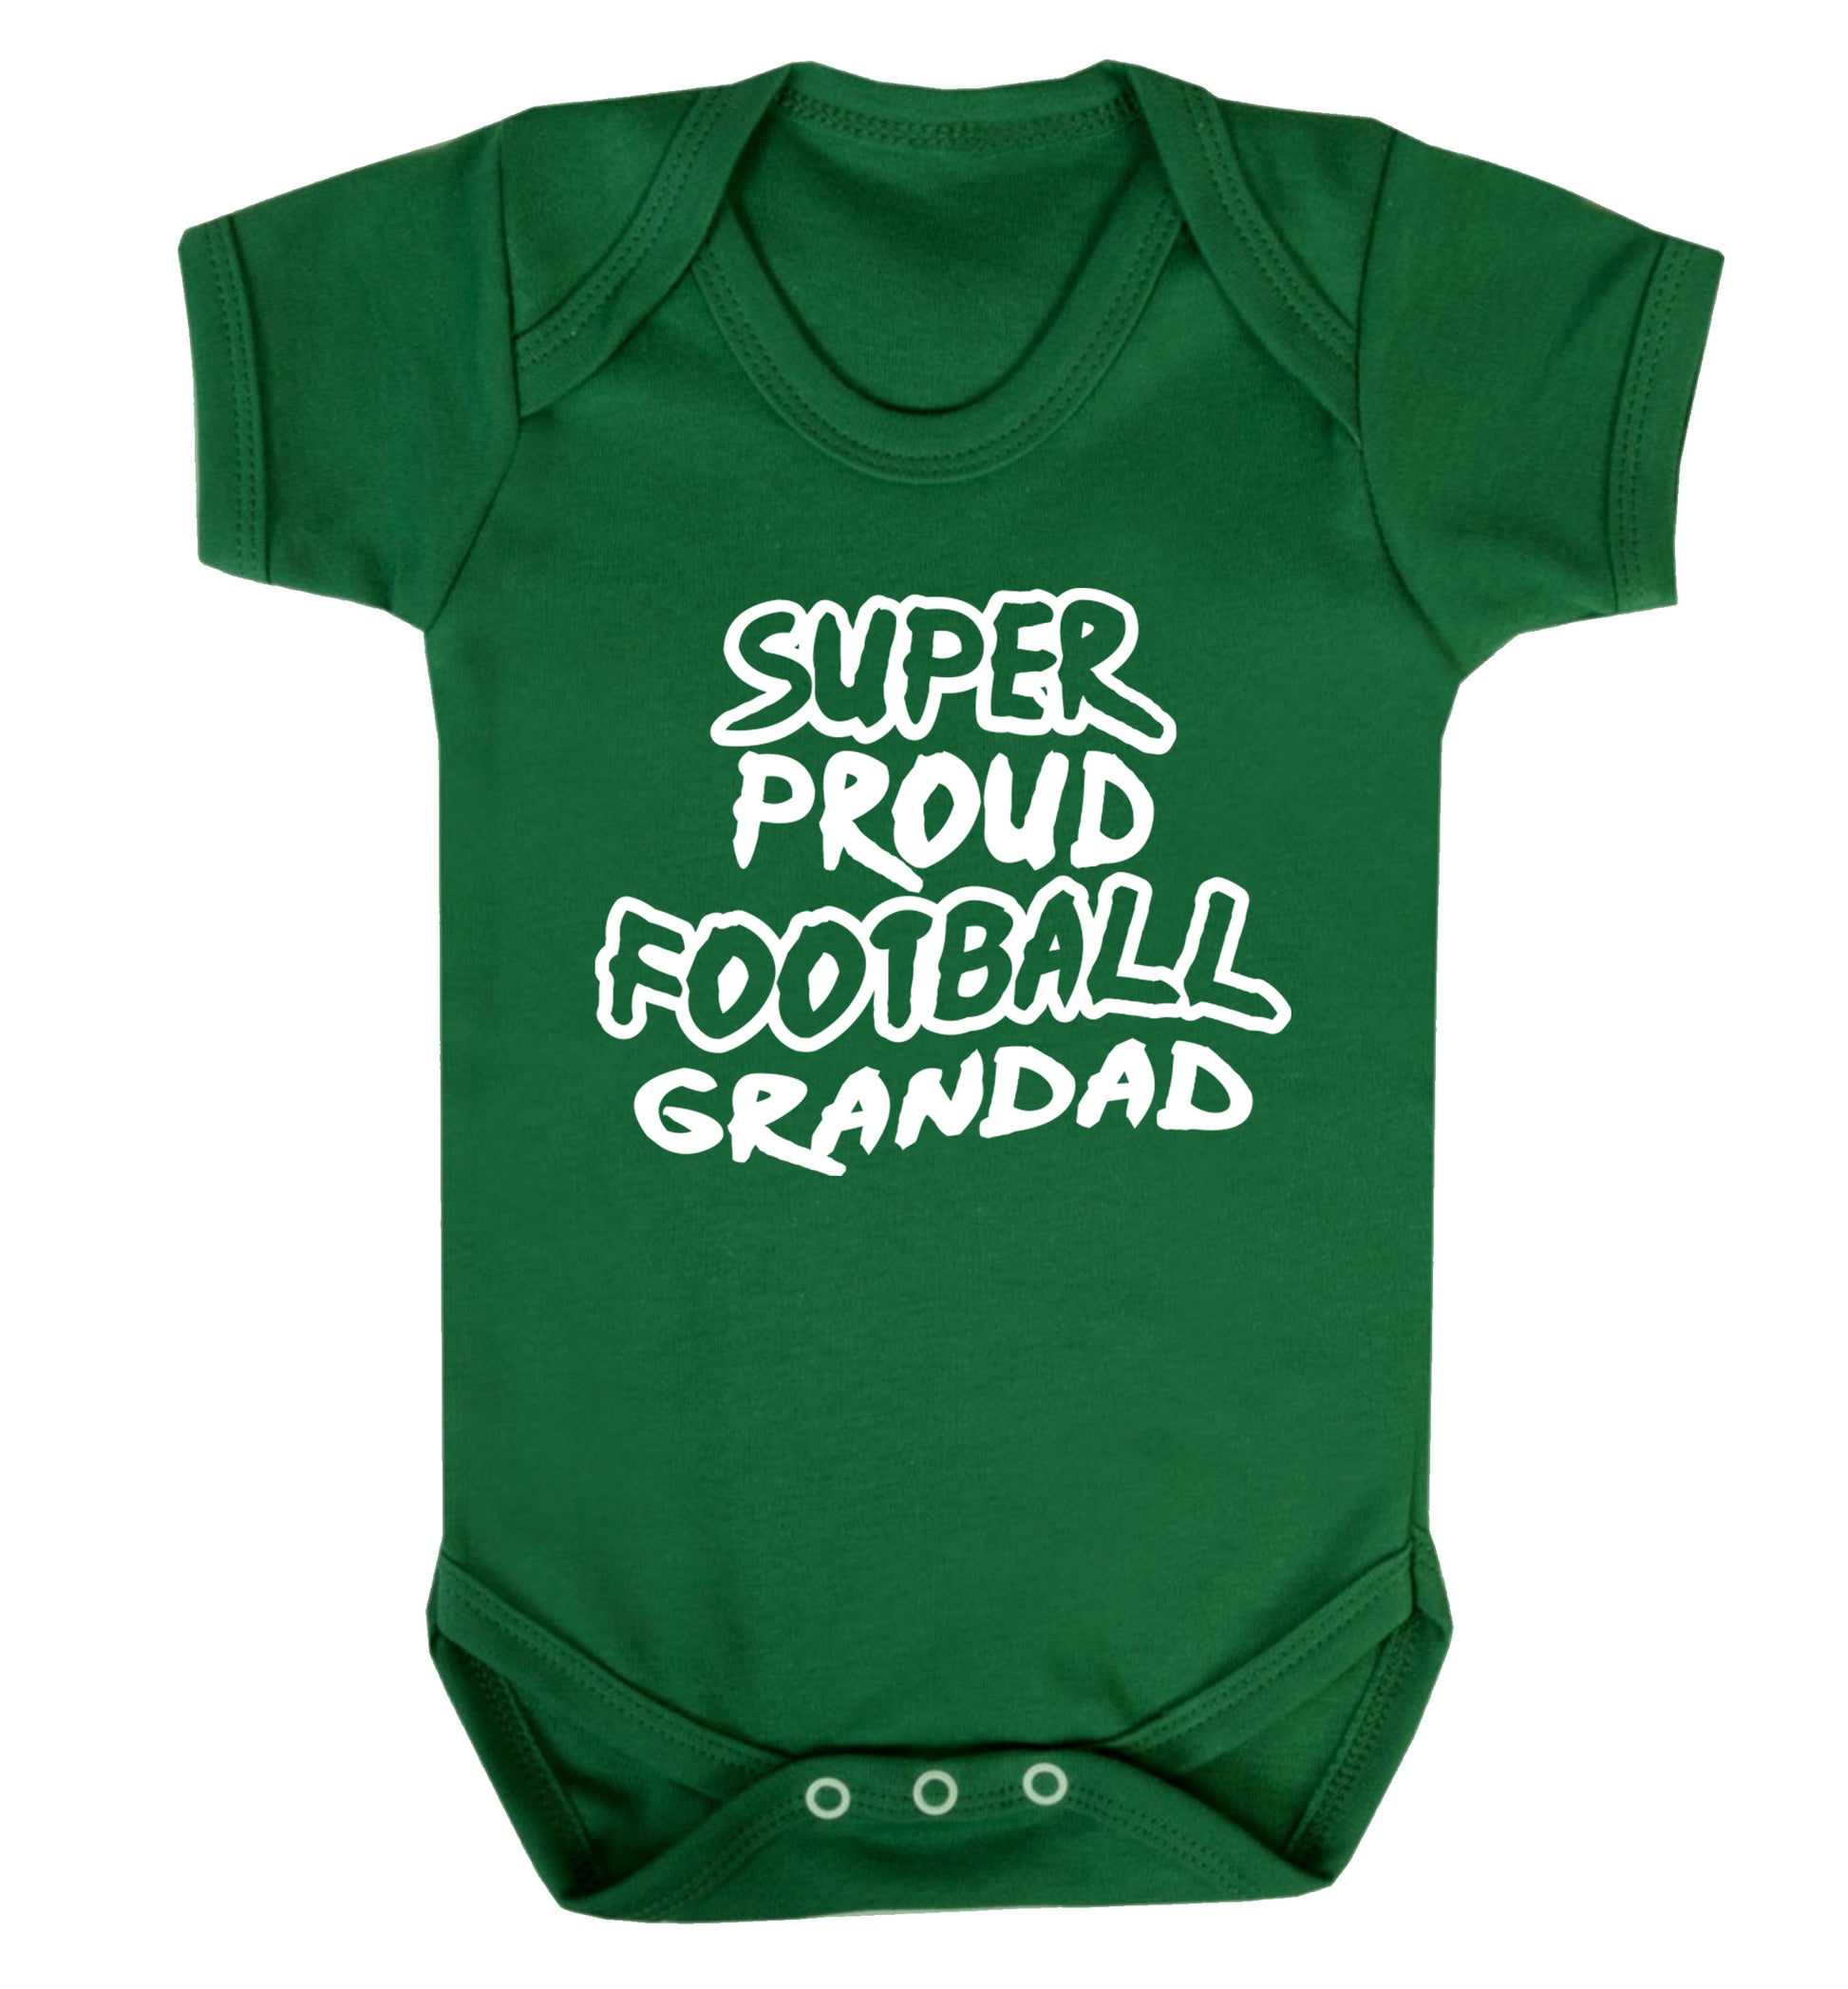 Super proud football grandad Baby Vest green 18-24 months